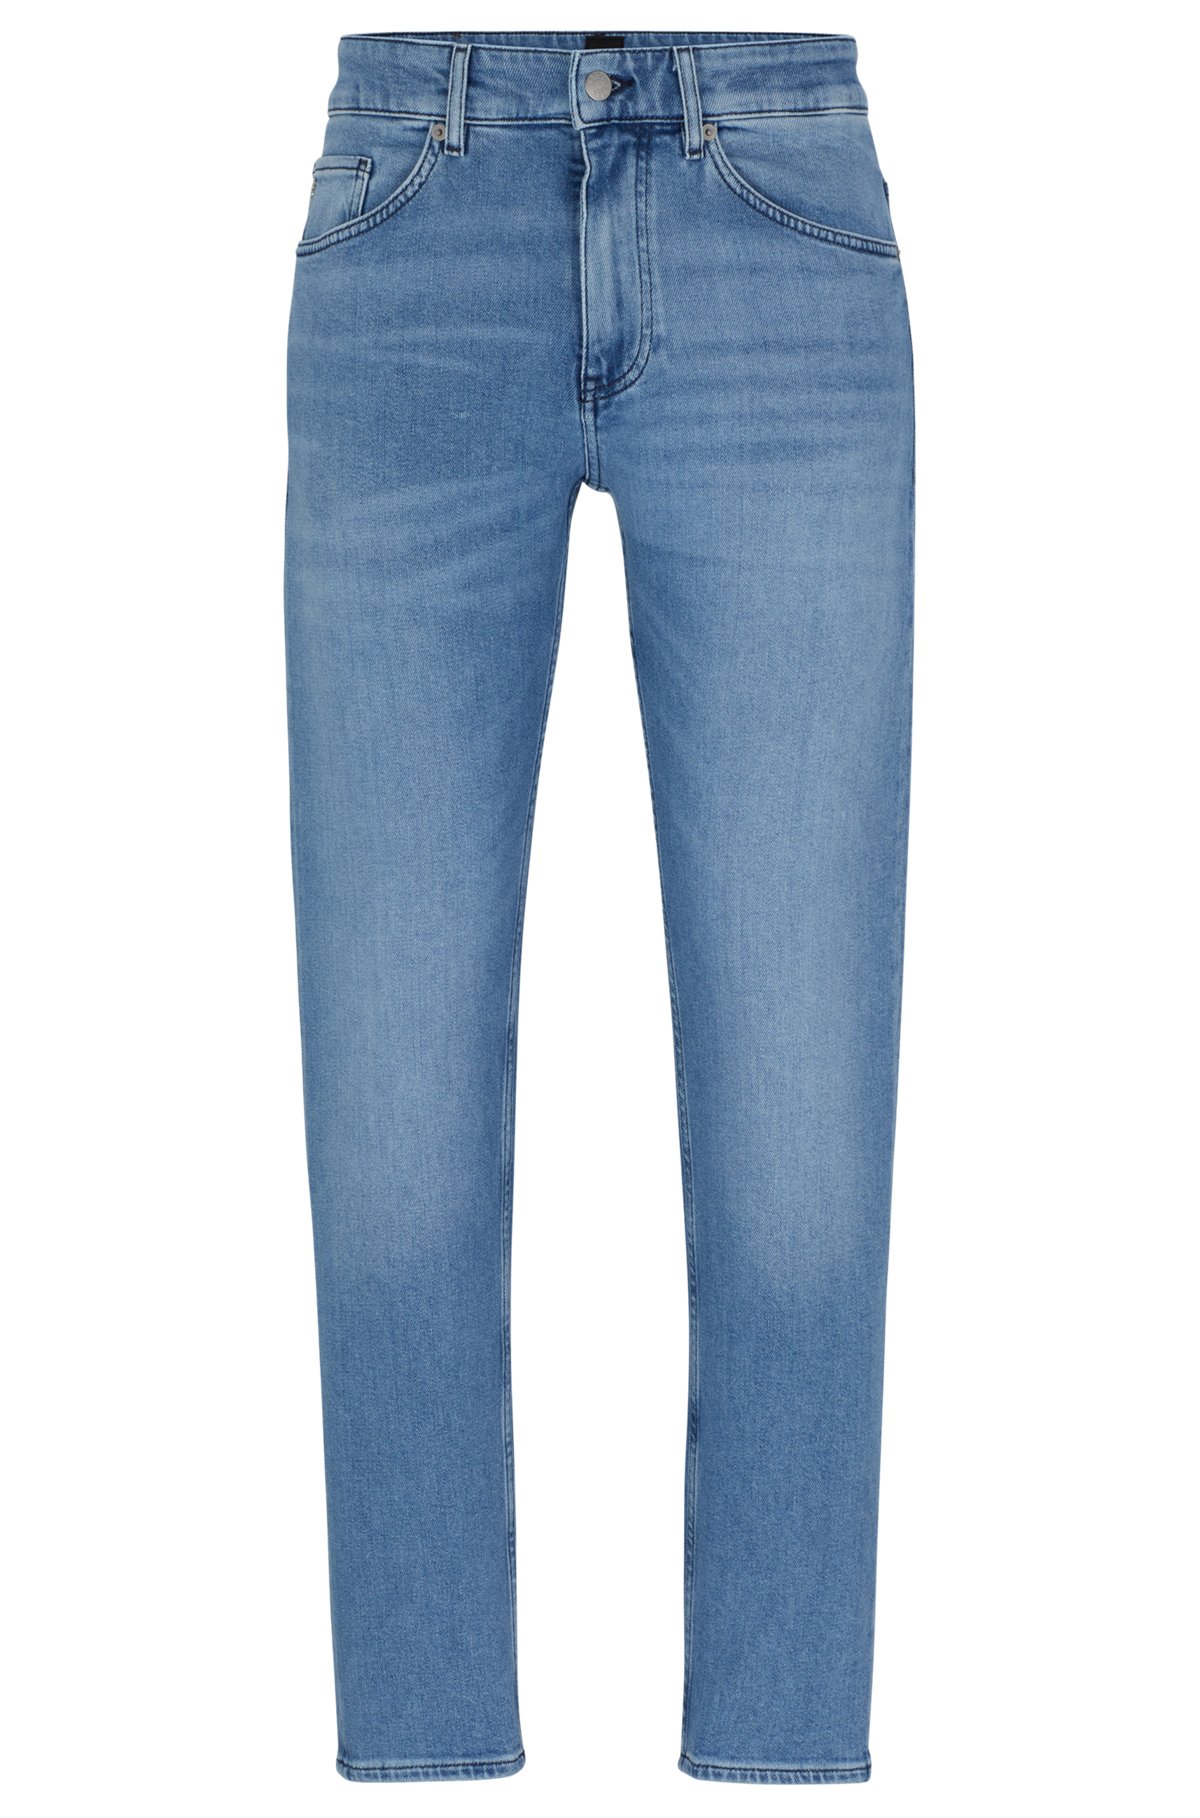 Hellblaue Tapered-Fit Jeans aus bequemem Stretch-Denim, Blau